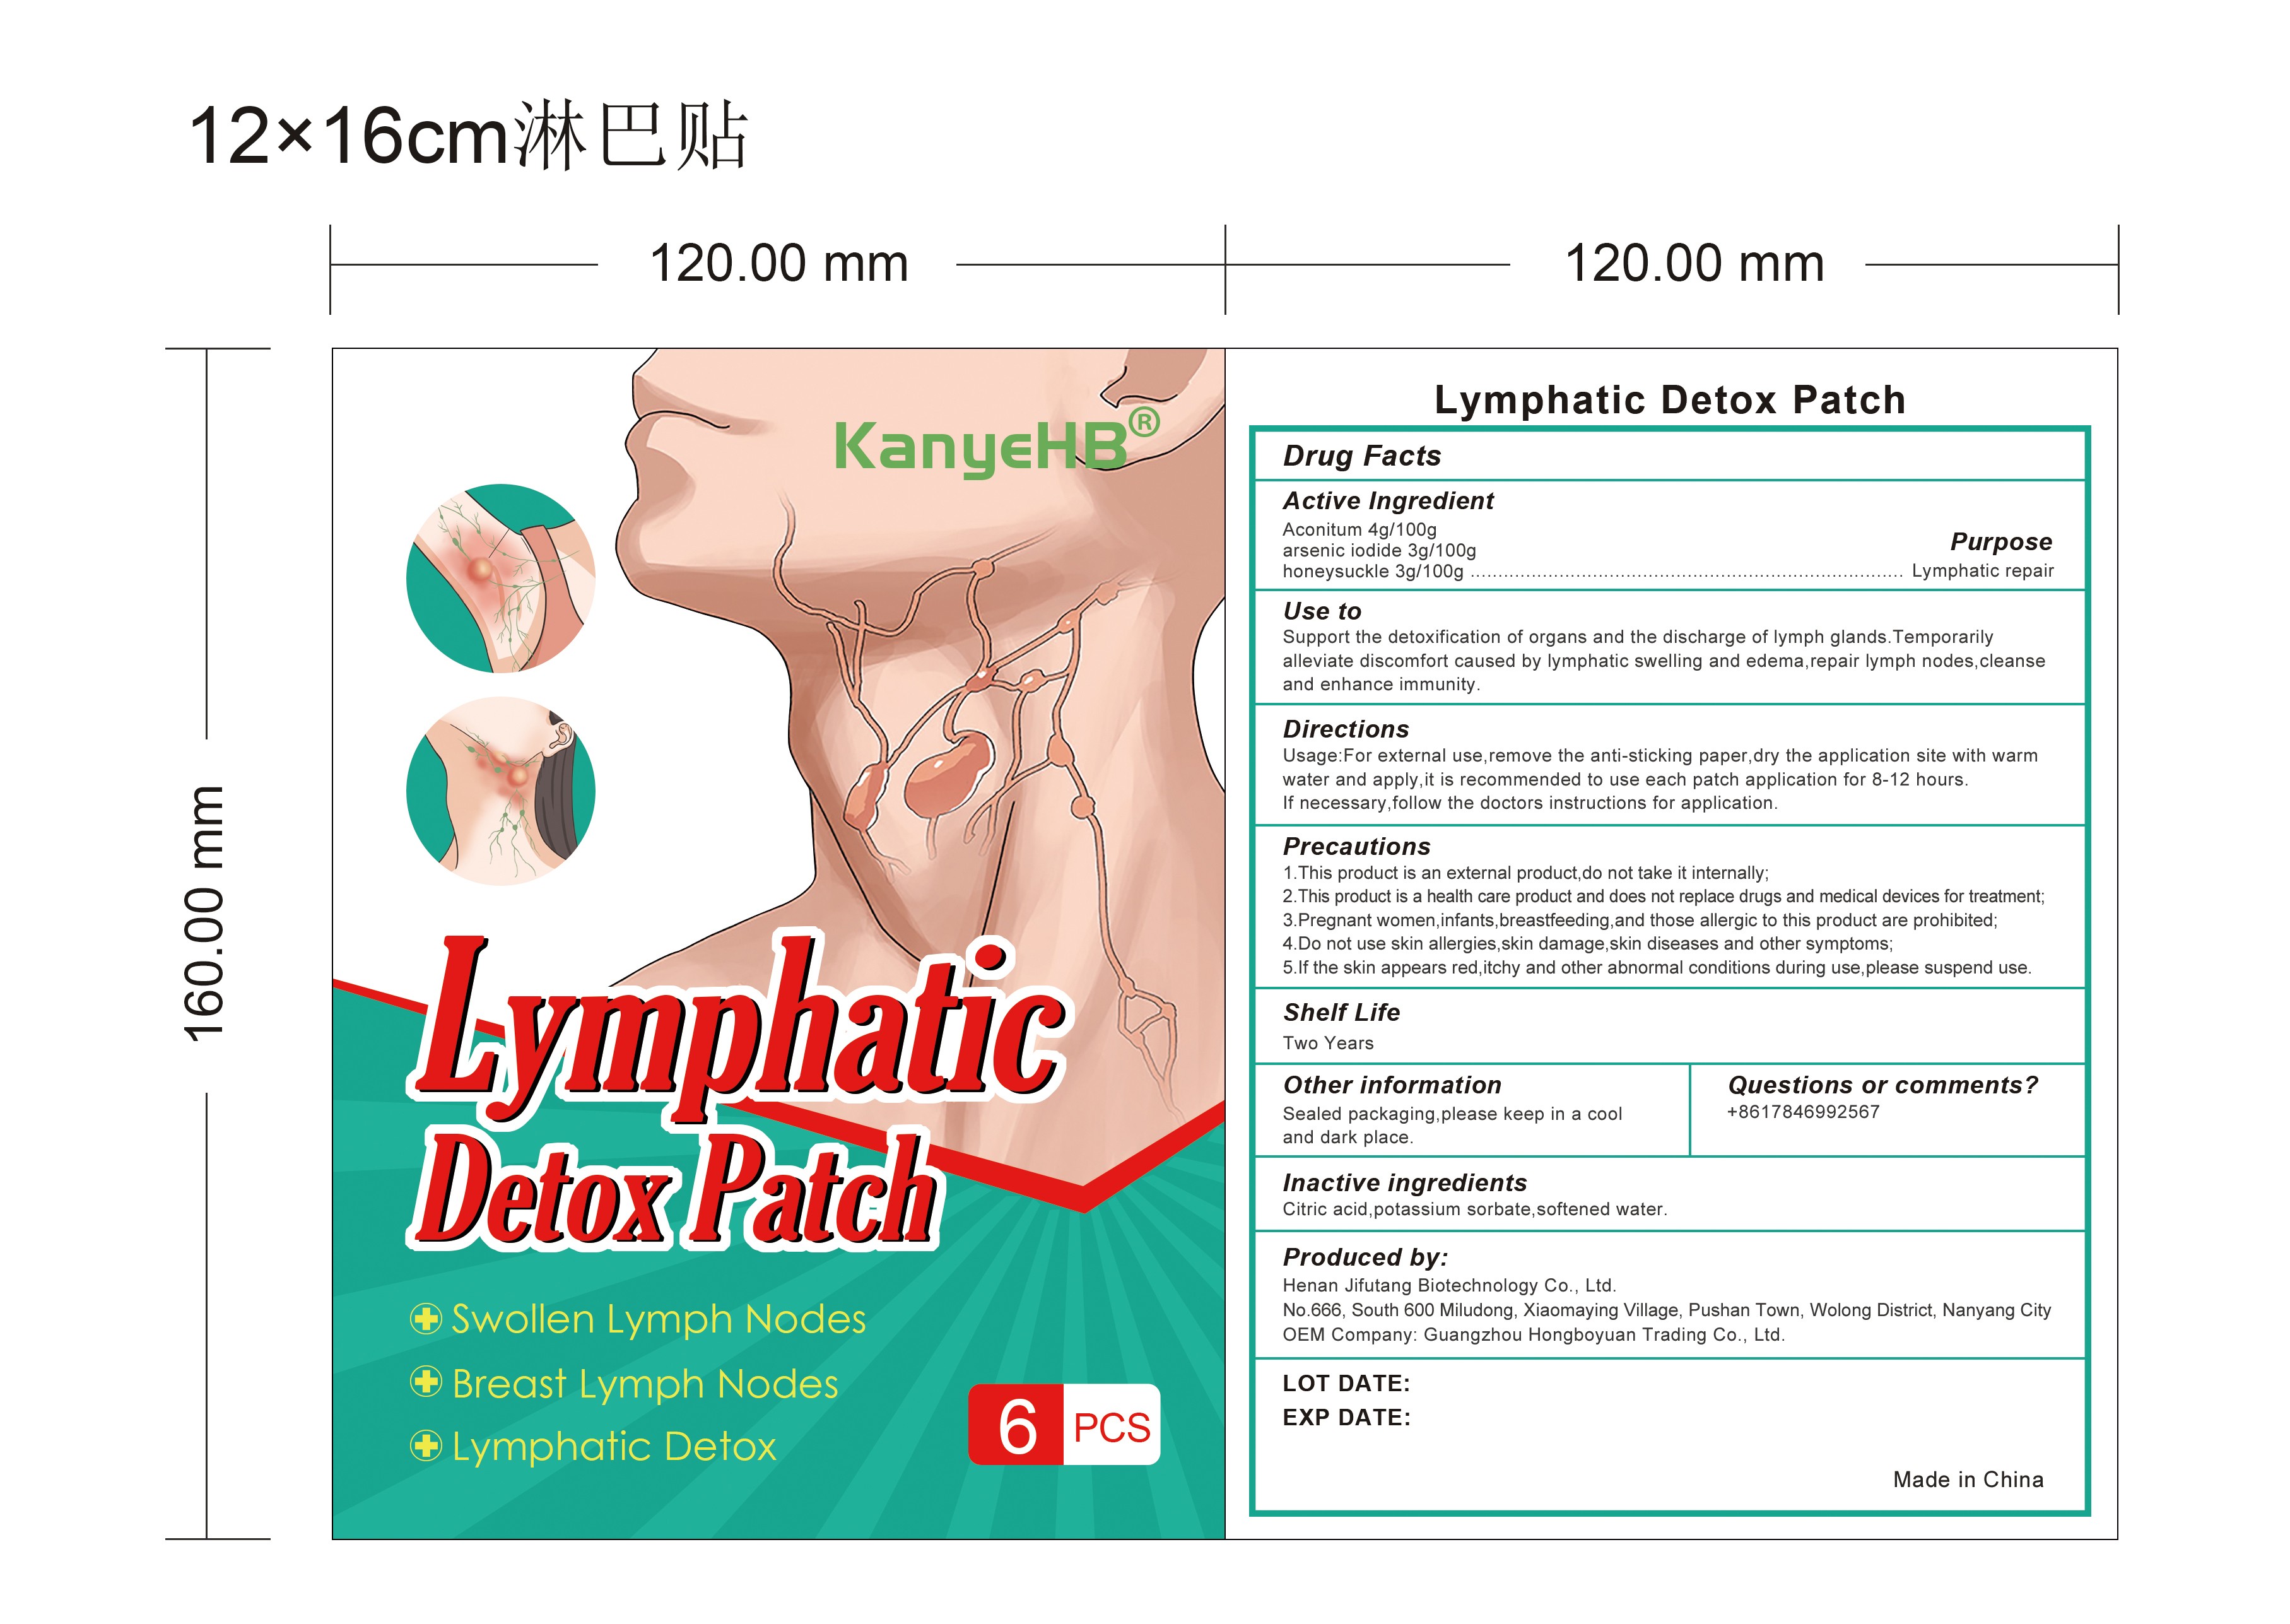 Lymphatic Detox Patch